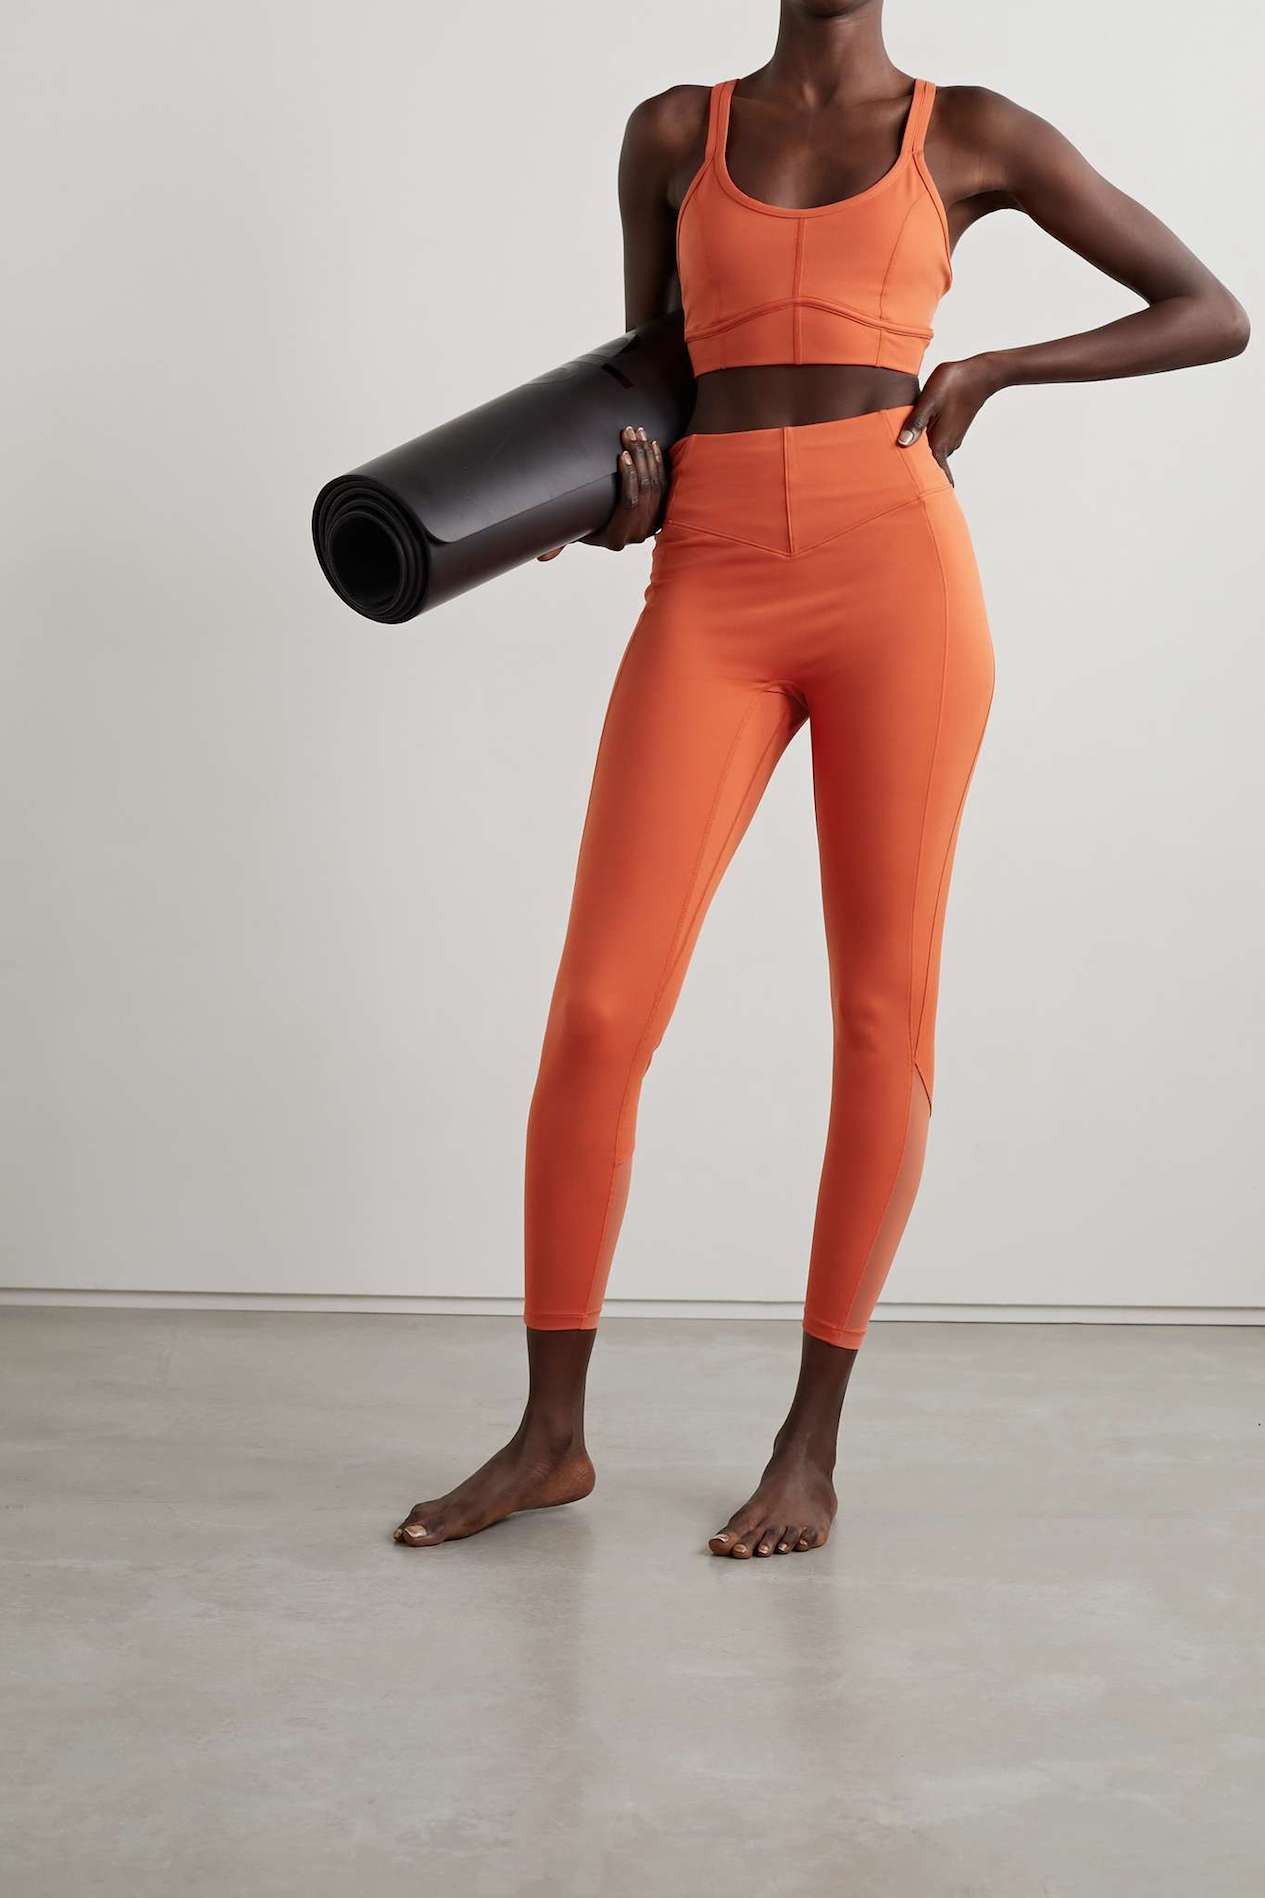 Woman in an orange workout set carrying a foam roller